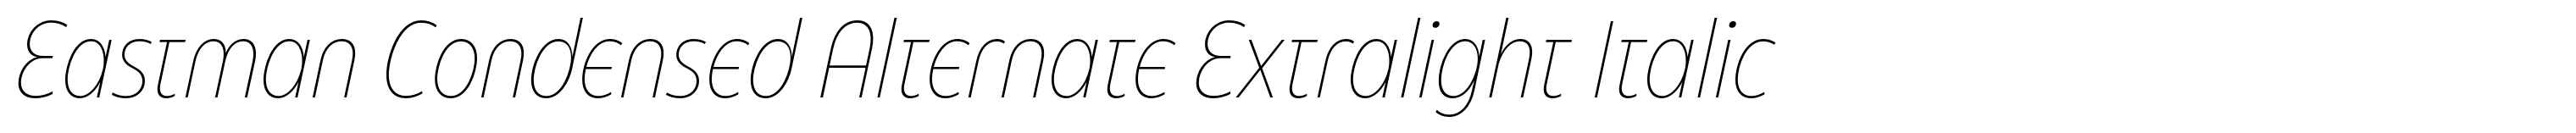 Eastman Condensed Alternate Extralight Italic